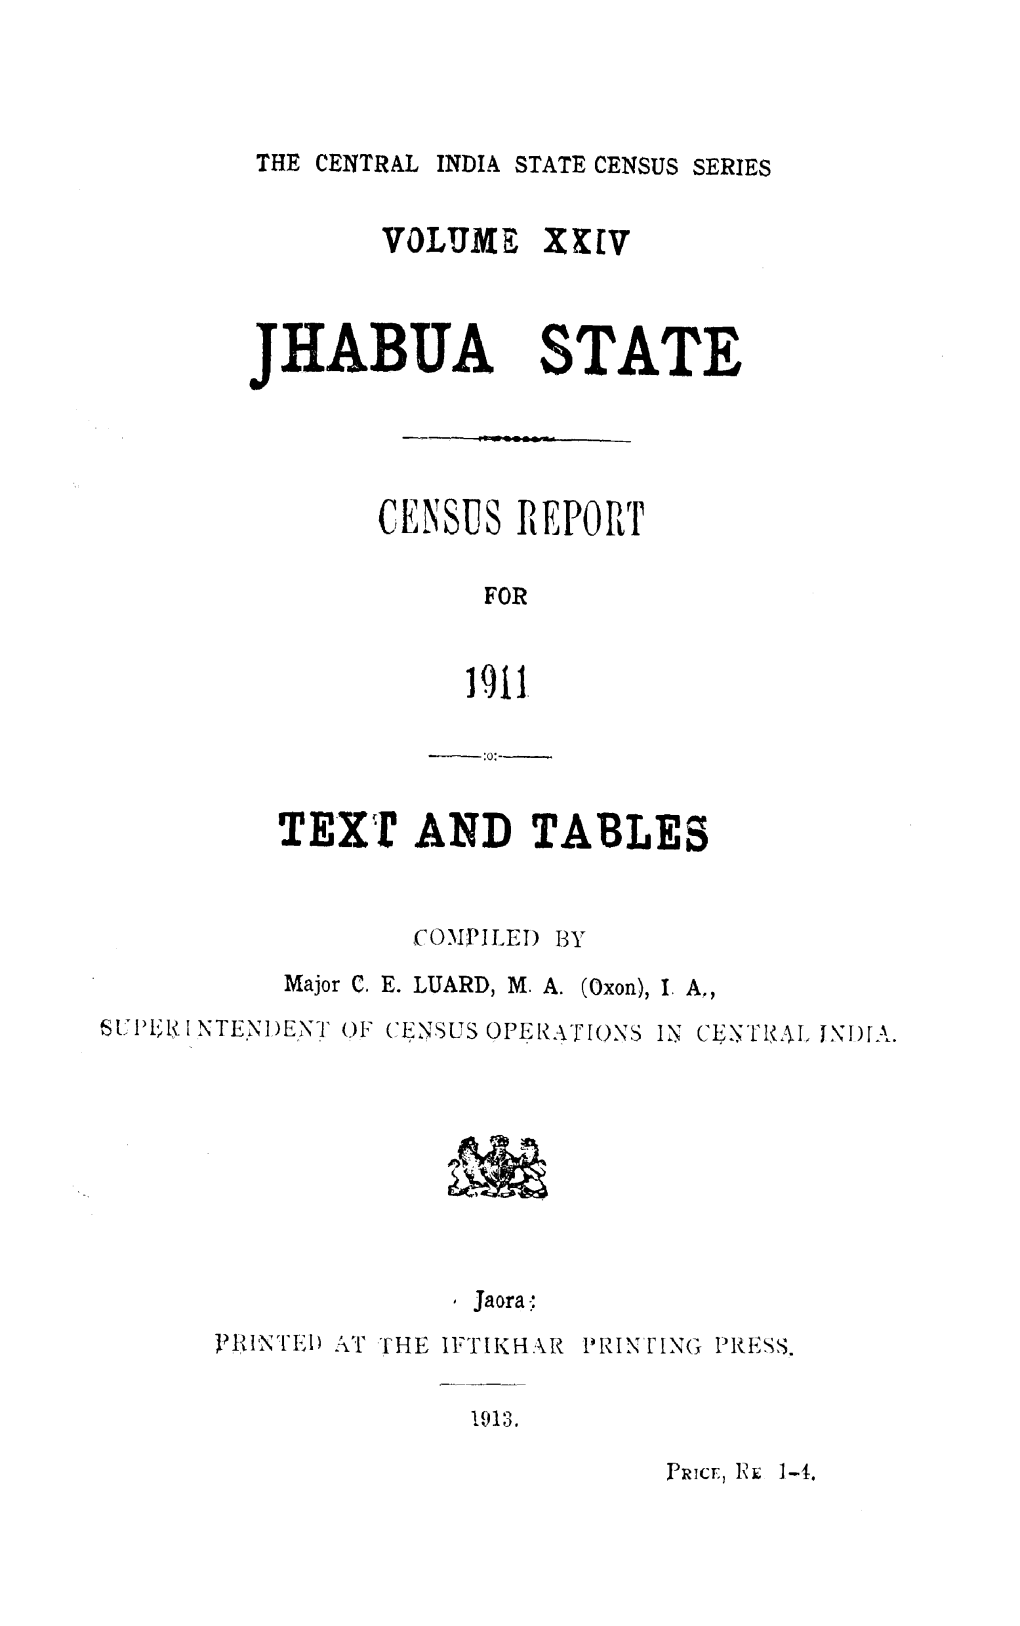 Jhabua State Census Report